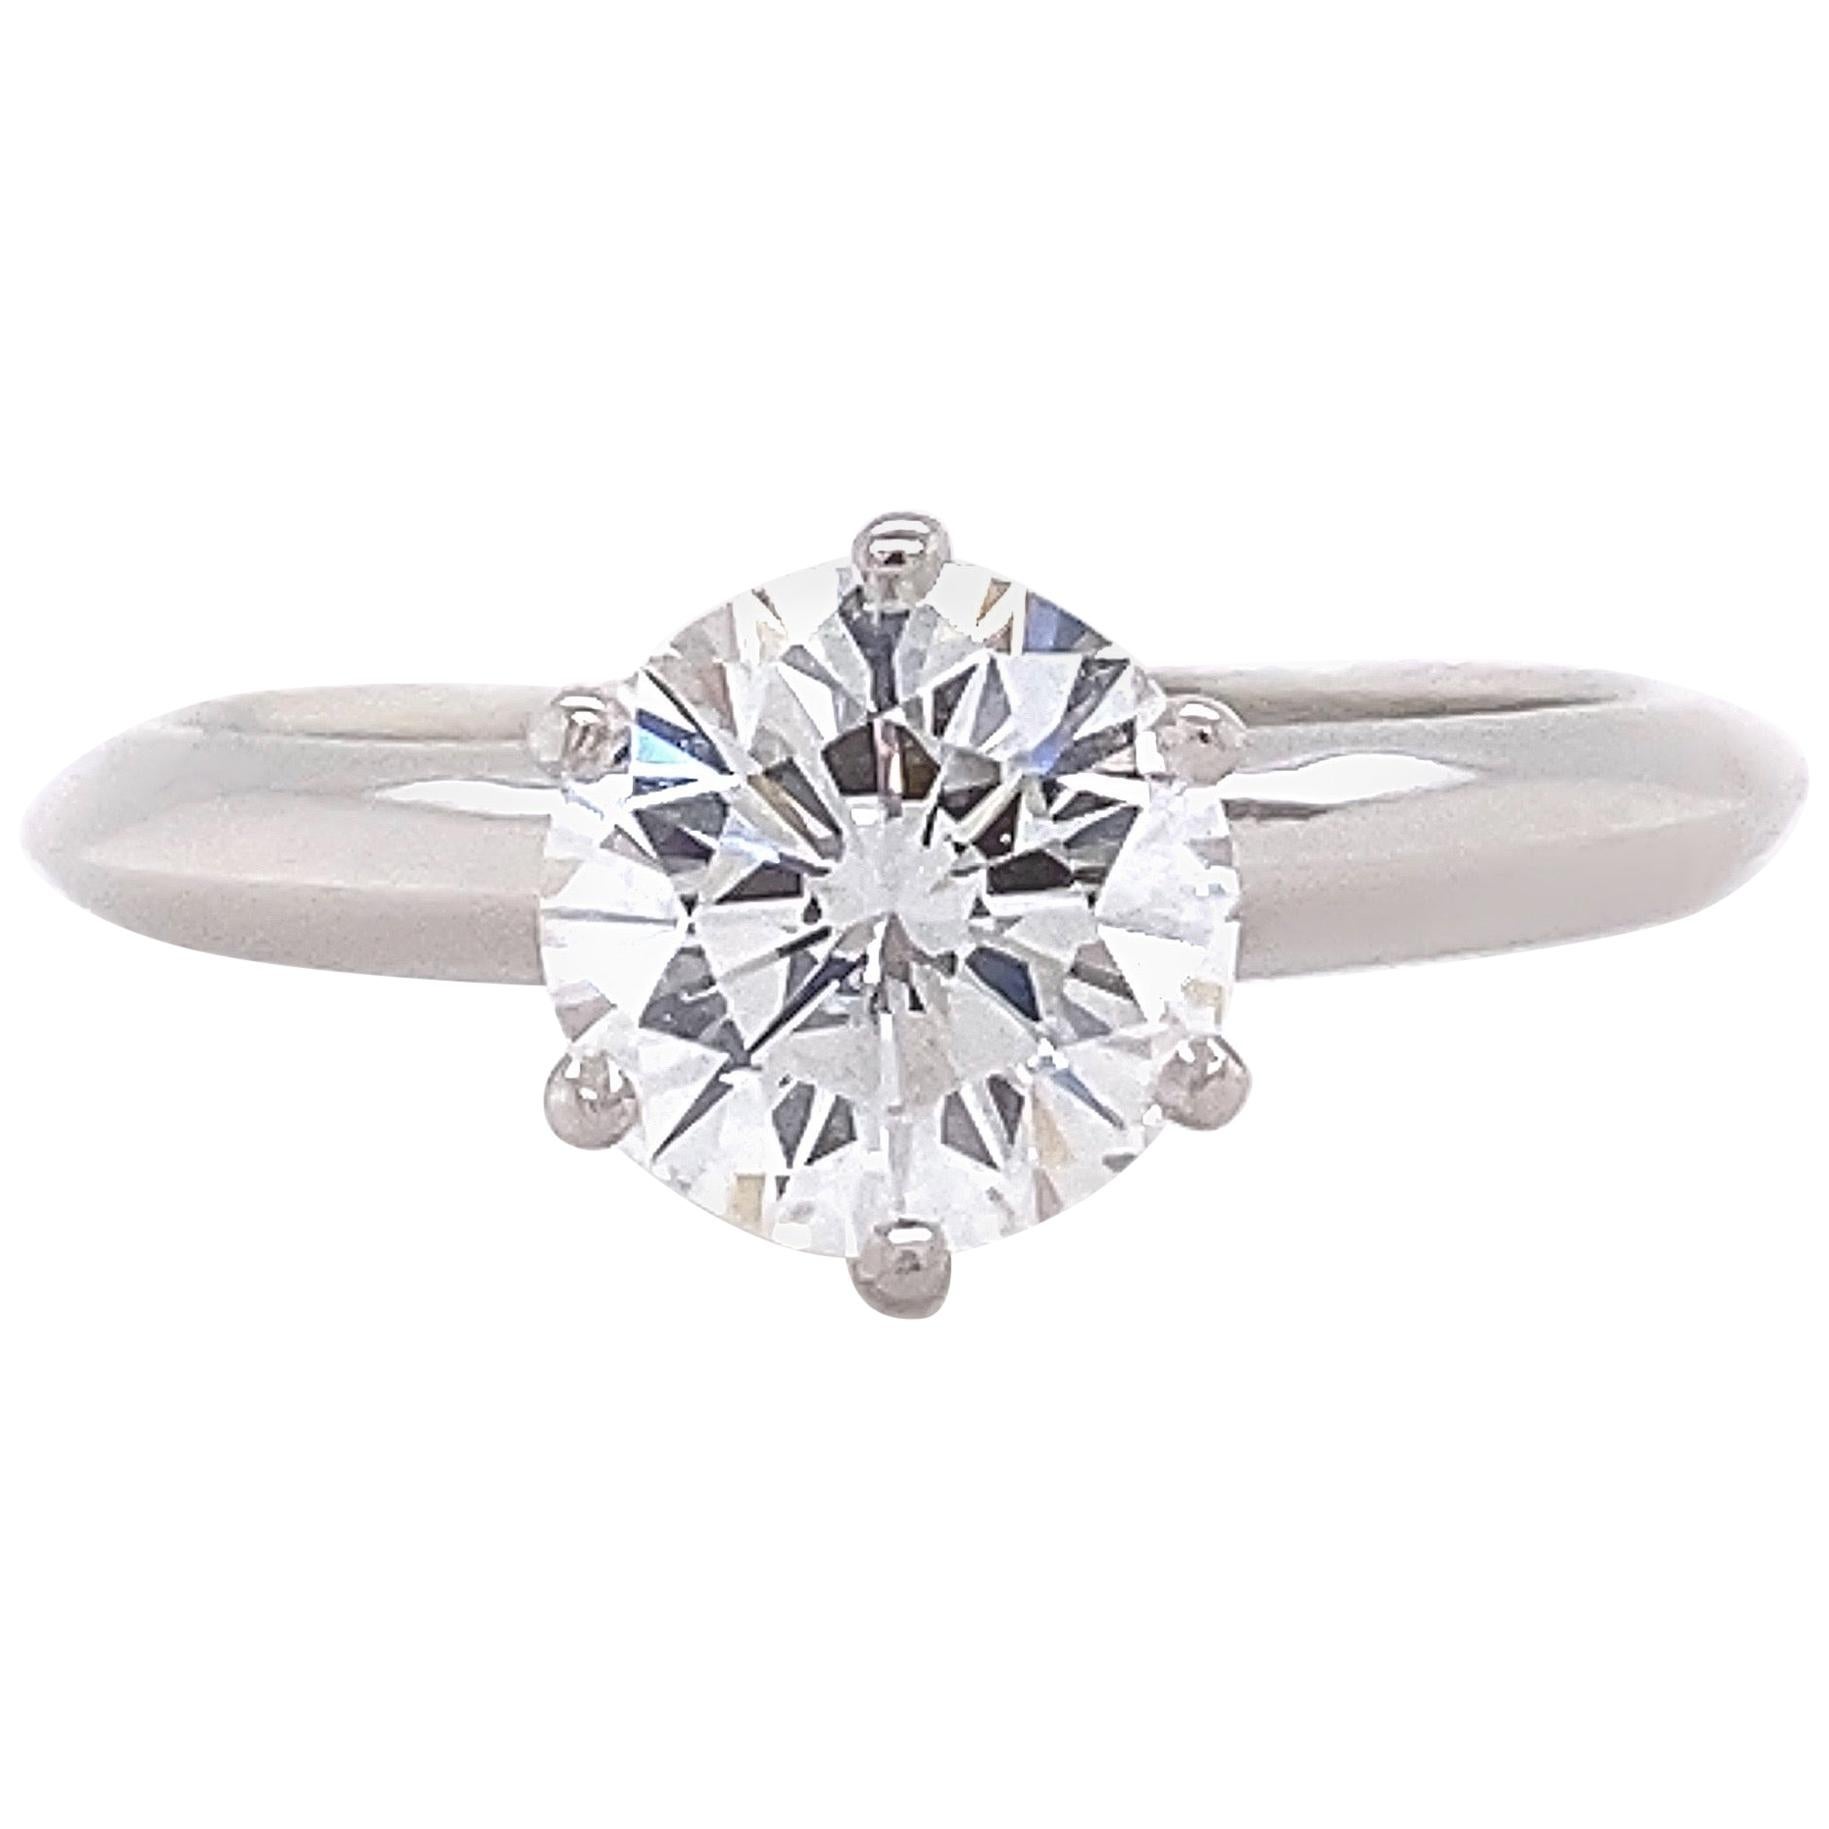 Tiffany & Co. Round Diamond 1.31 Carat E VS1 Solitaire Platinum Engagement Ring